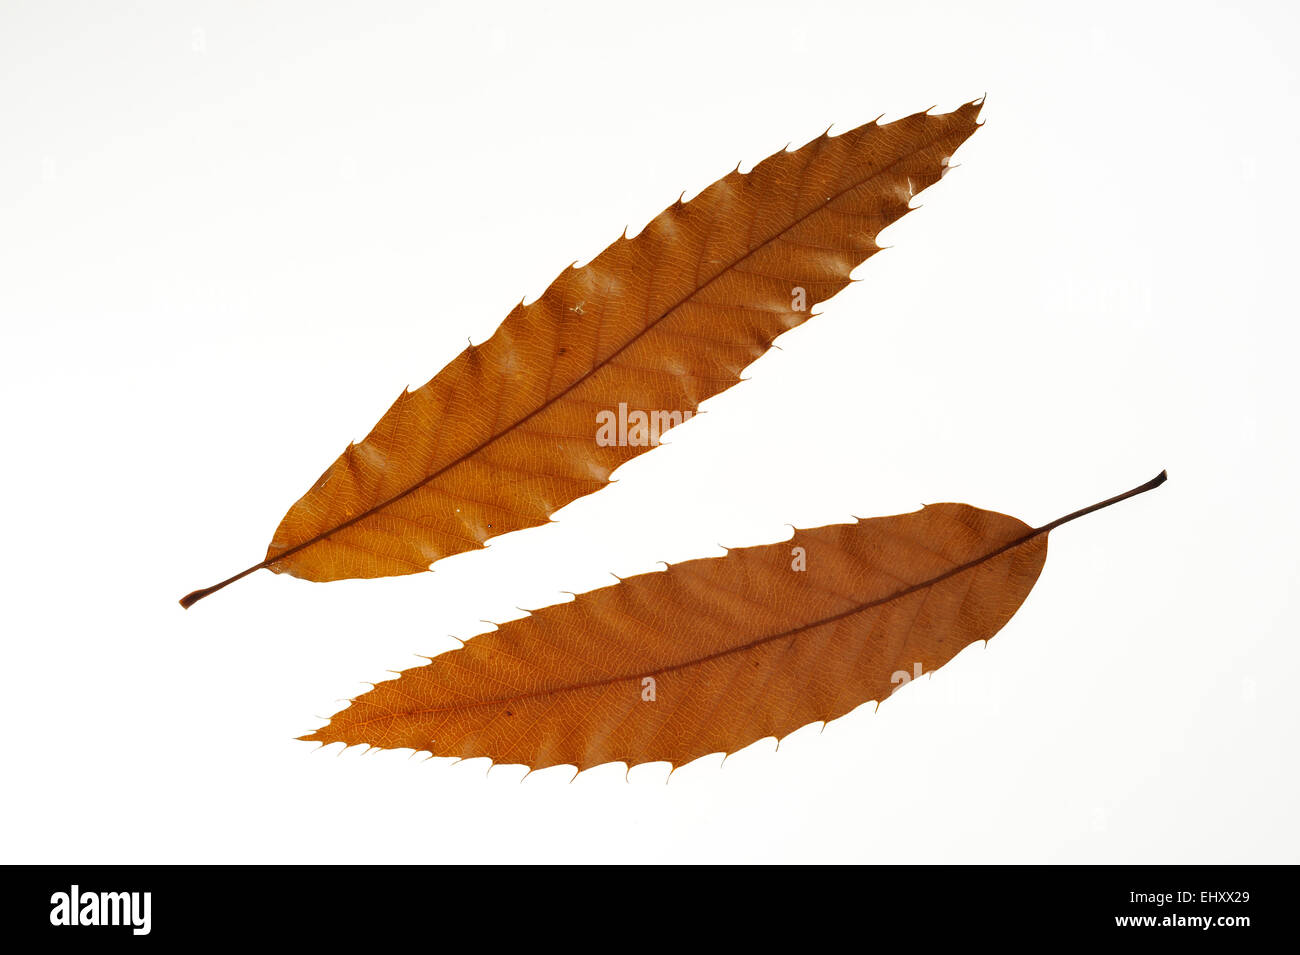 Lebanon oak (Quercus libani) leaves in autumn colours, native to western Asia against white background Stock Photo